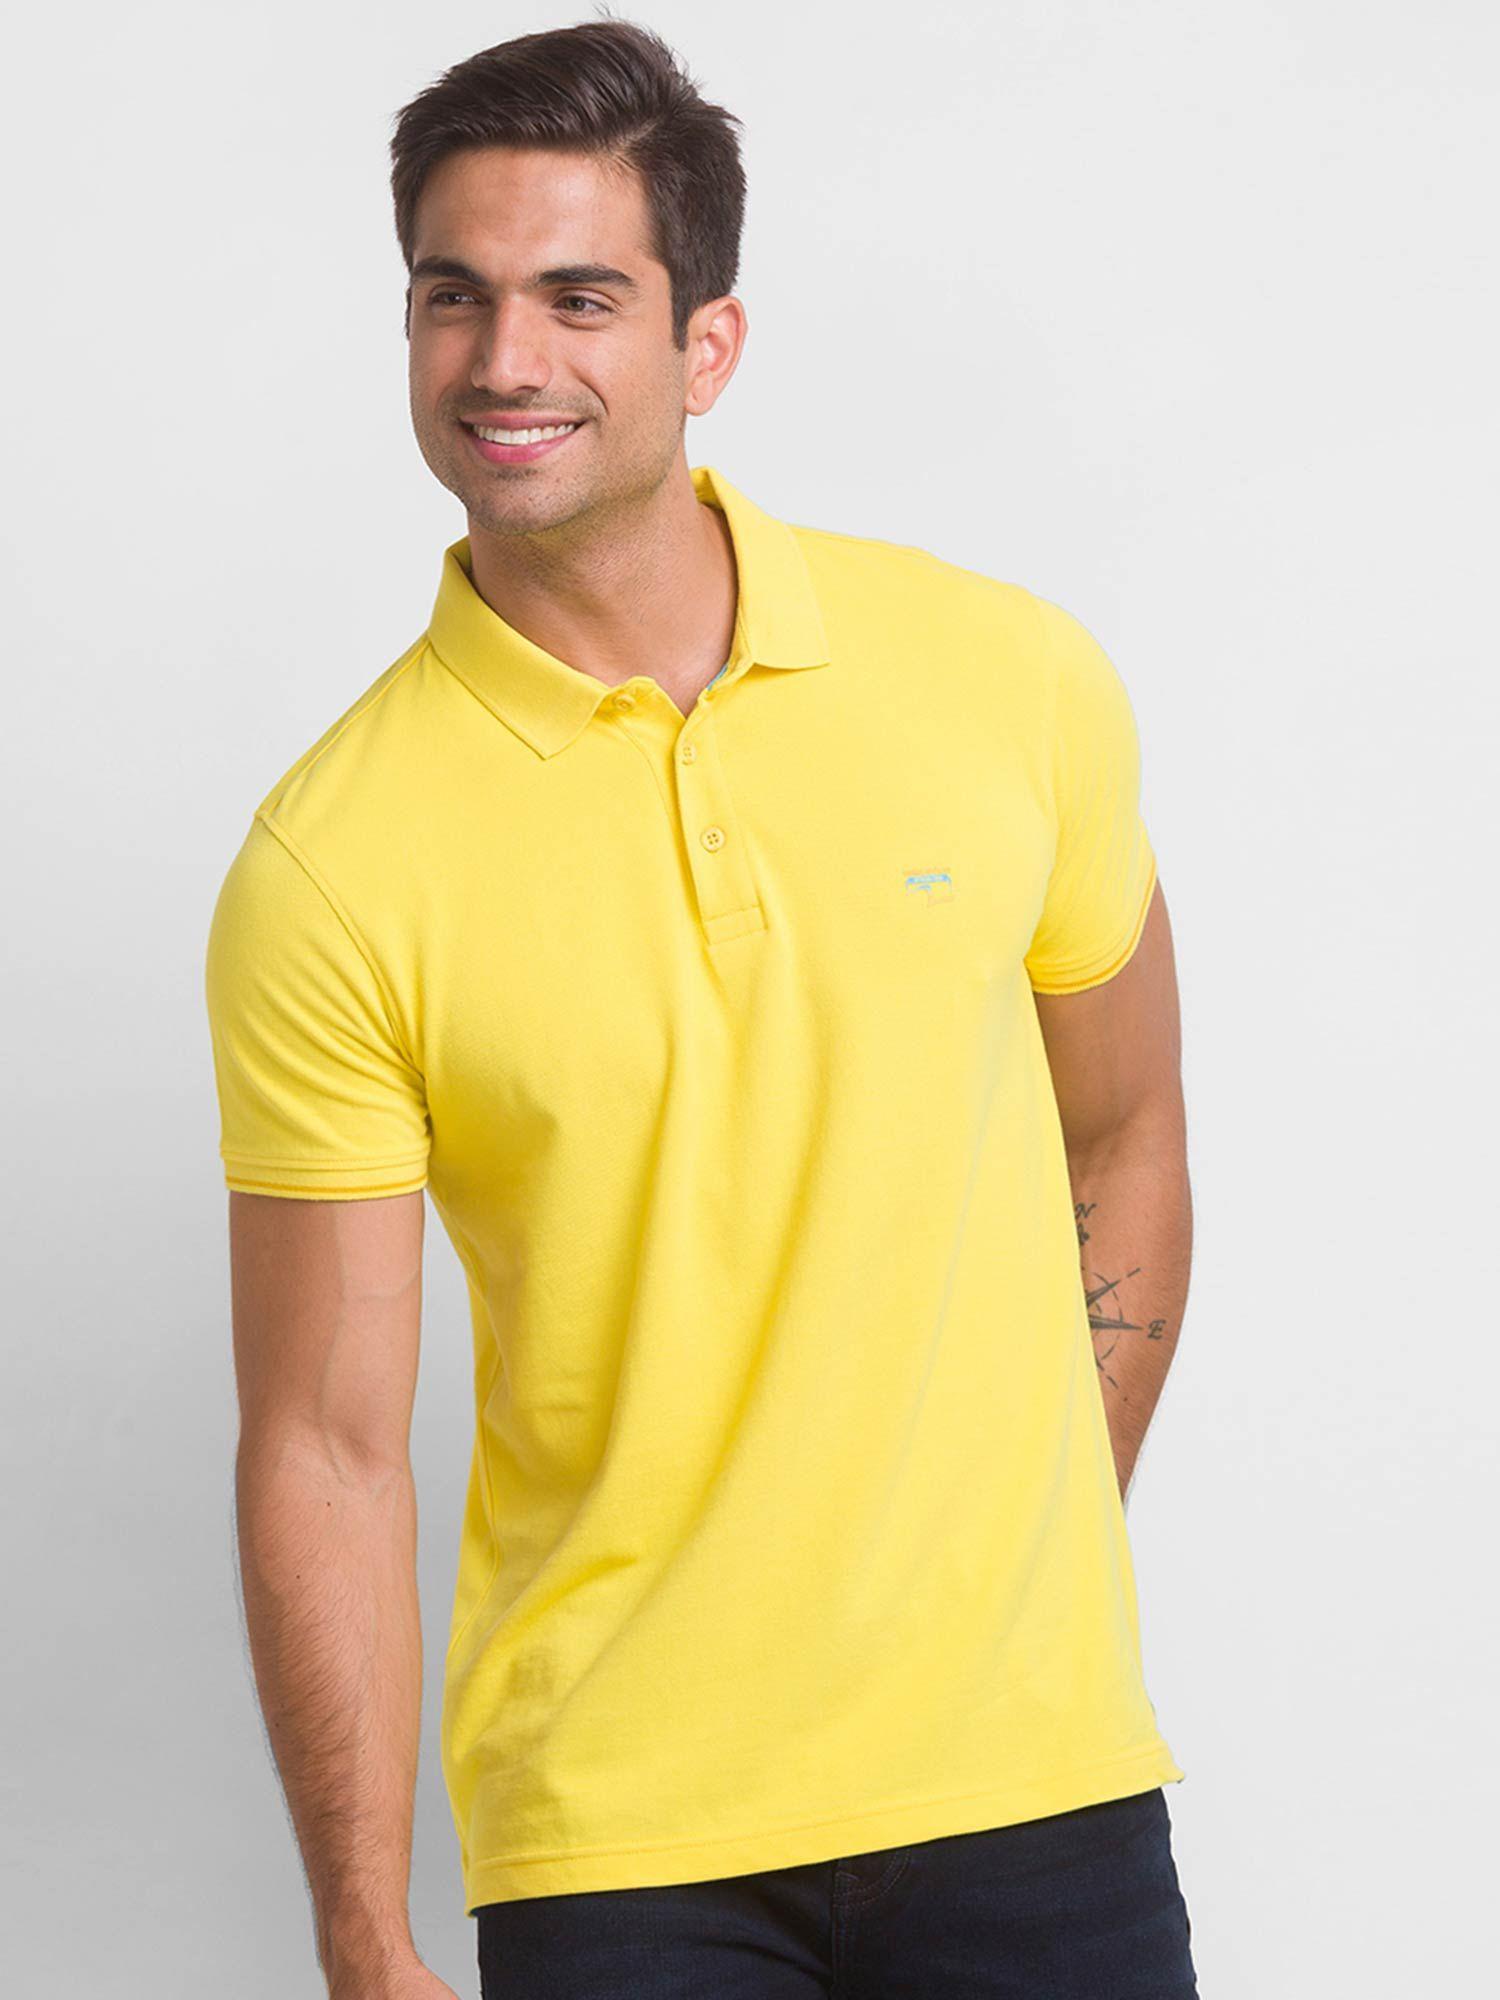 sulphur-yellow-cotton-half-sleeve-plain-casual-polo-t-shirt-for-men